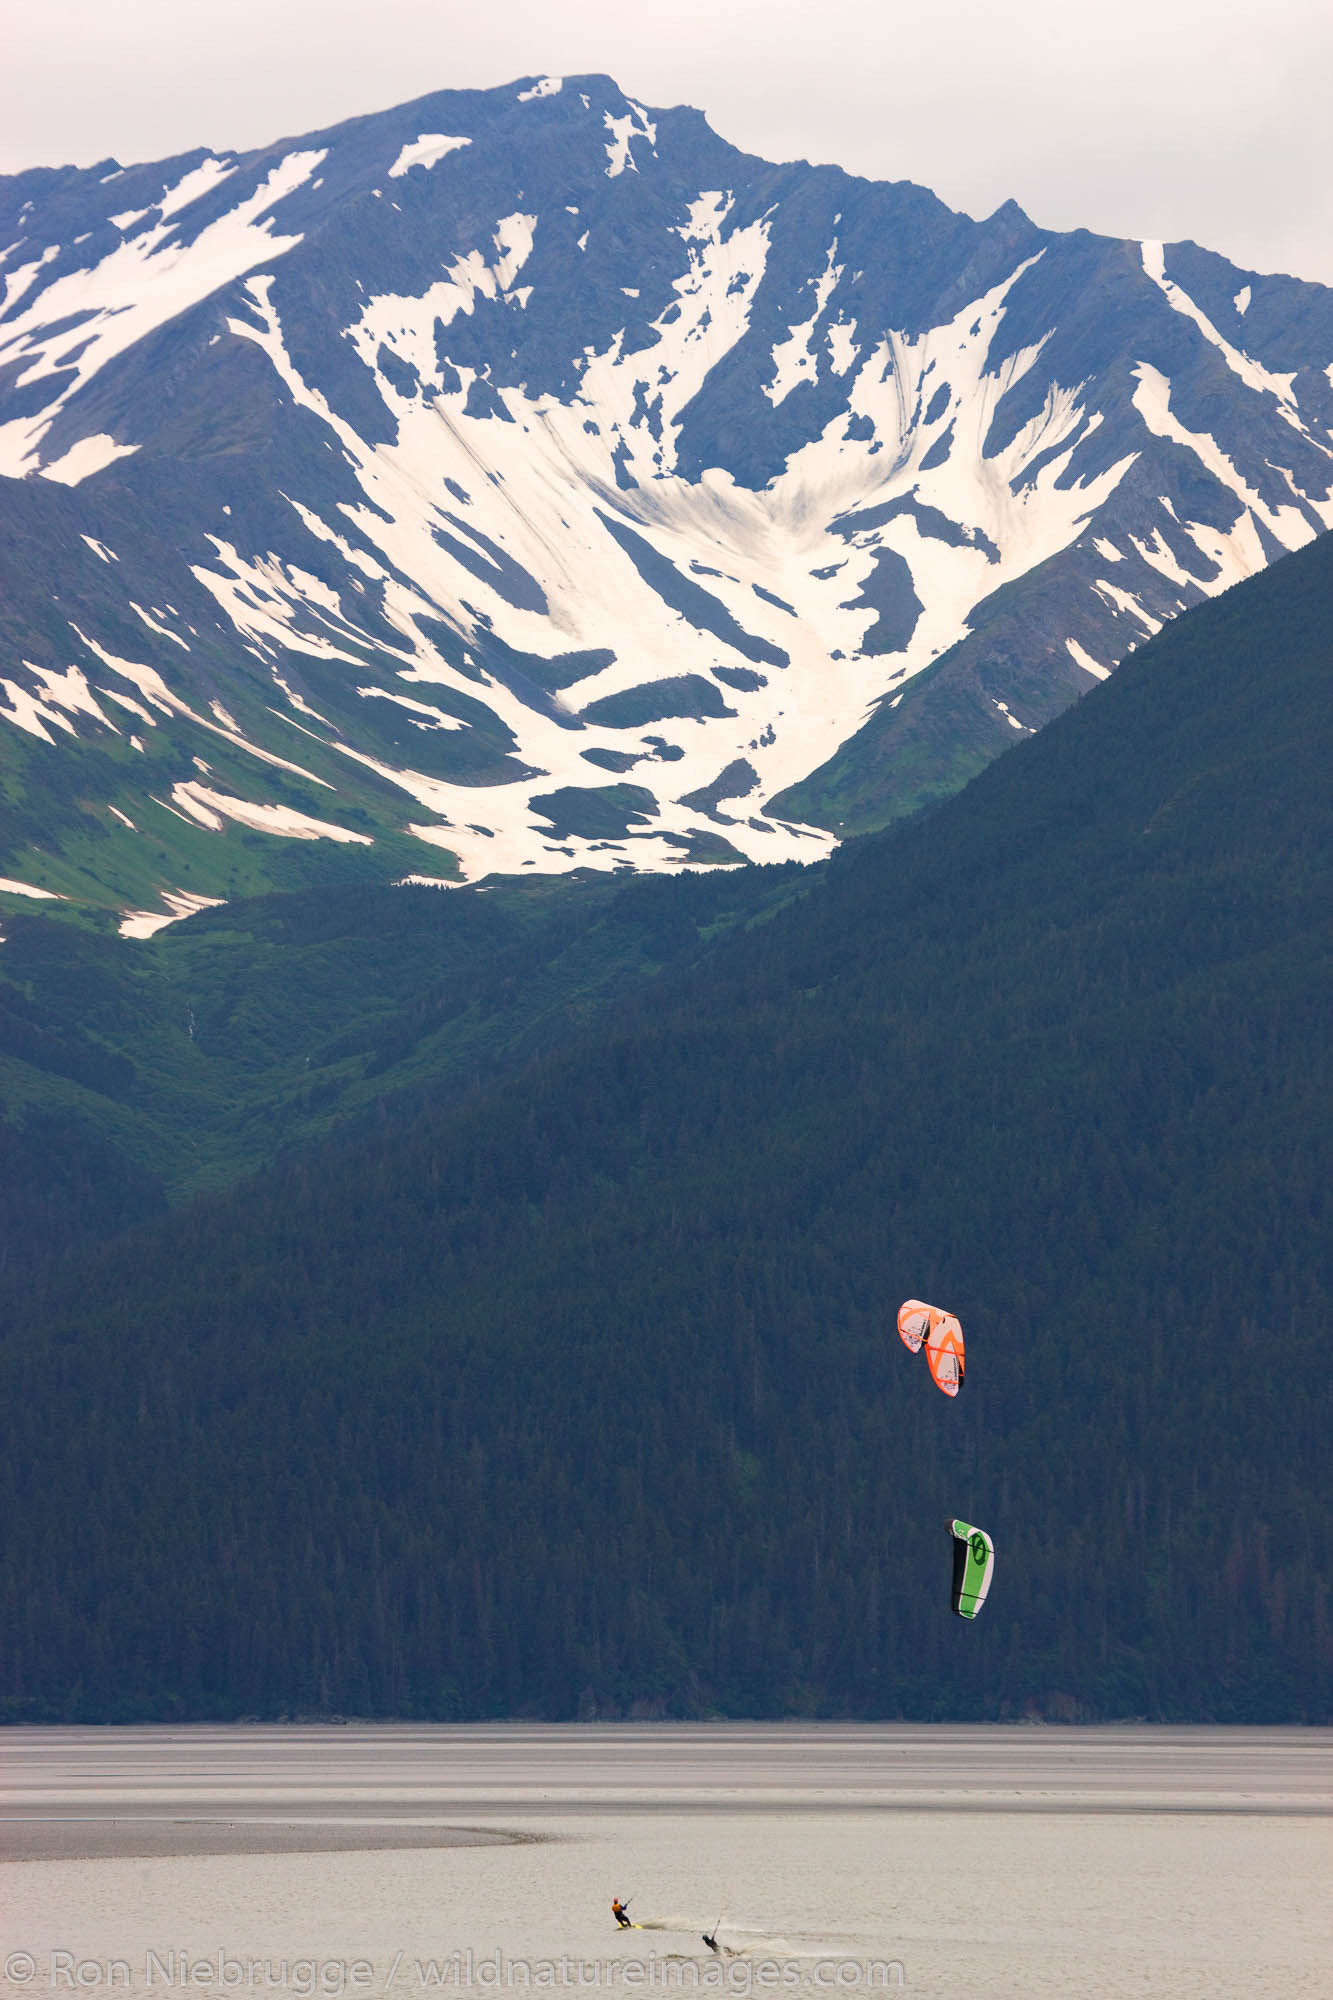 Troy and Mark kiteboarding on Turnagain Arm, near Anchorage, Alaska.